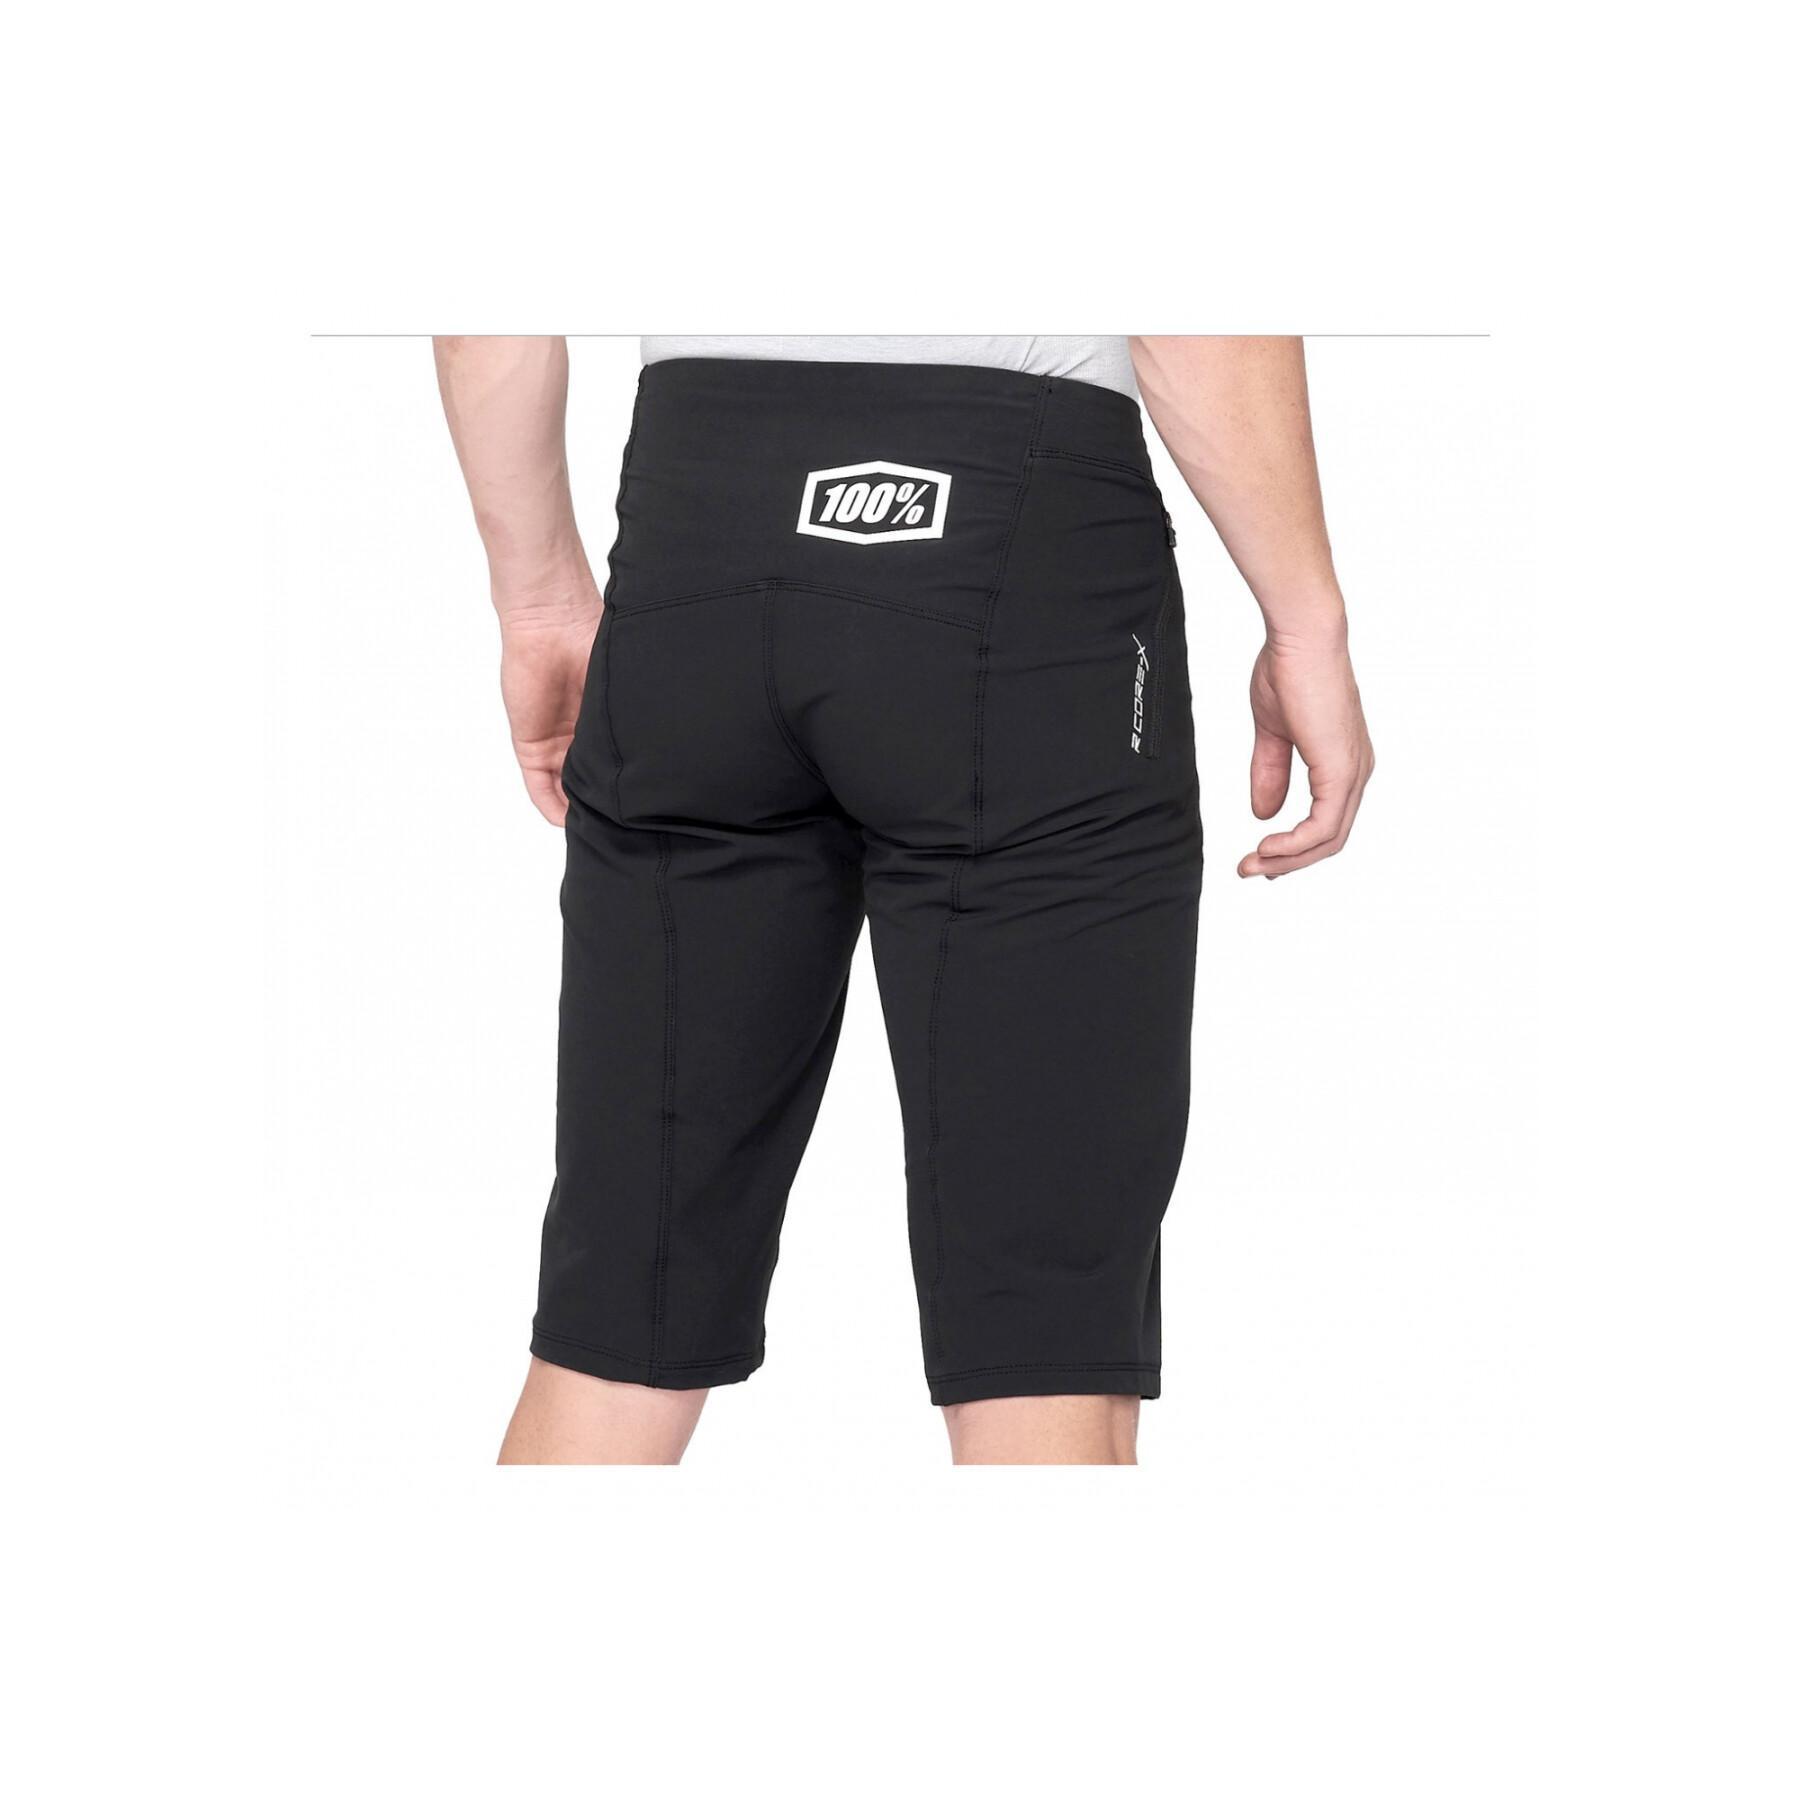 Pantaloncini 100% R-Core X Sp21